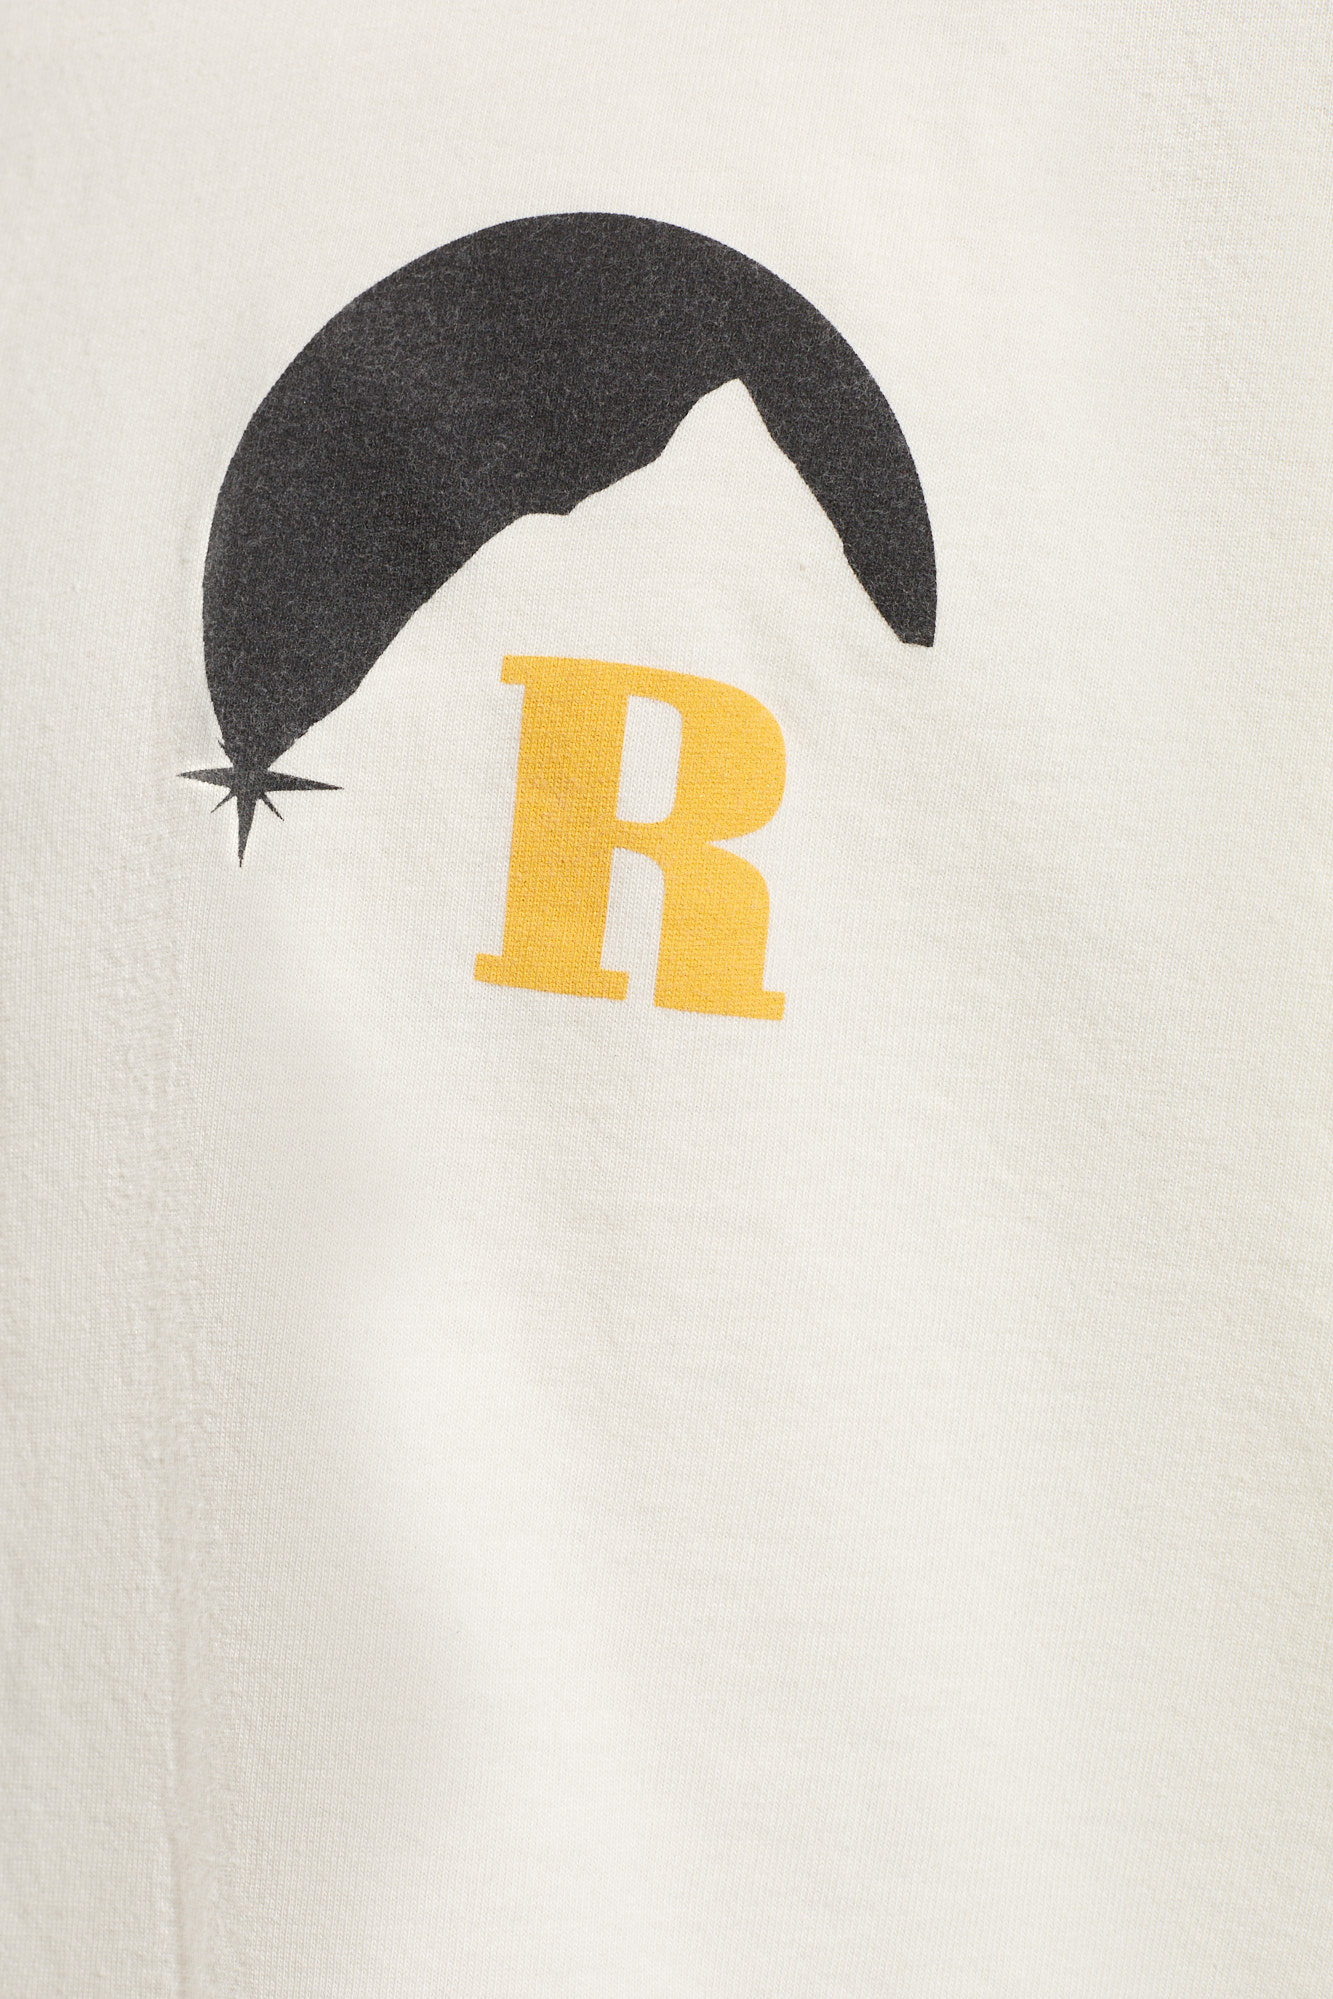 Rhude T-shirt through with logo